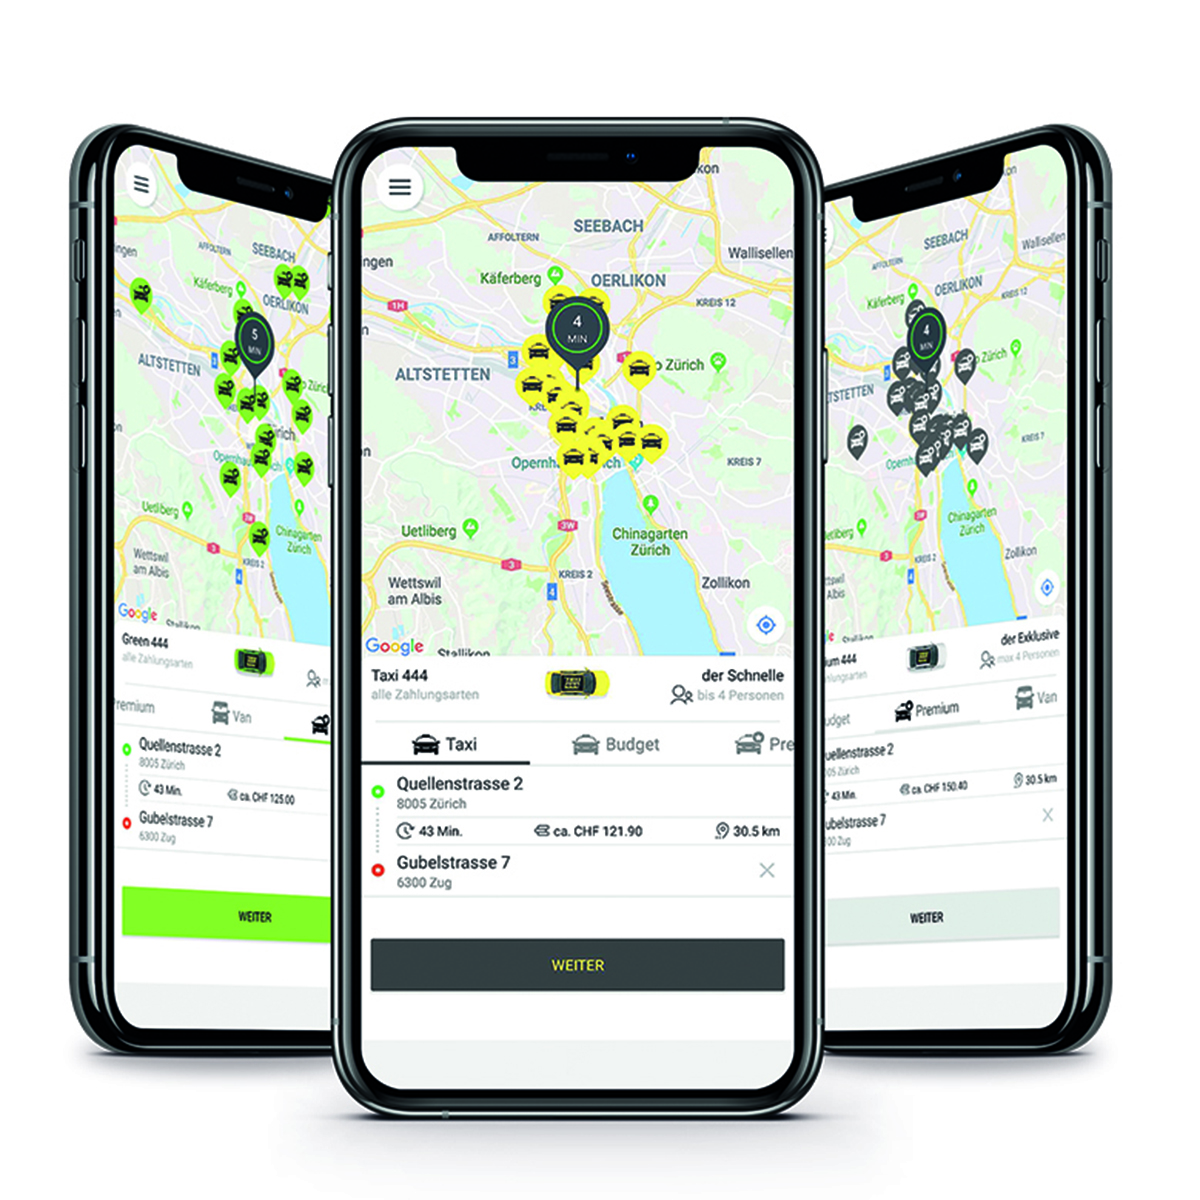 Taxi 444 lanciert neue App und individualisiert das Service-Angebot: Taxi à la carte